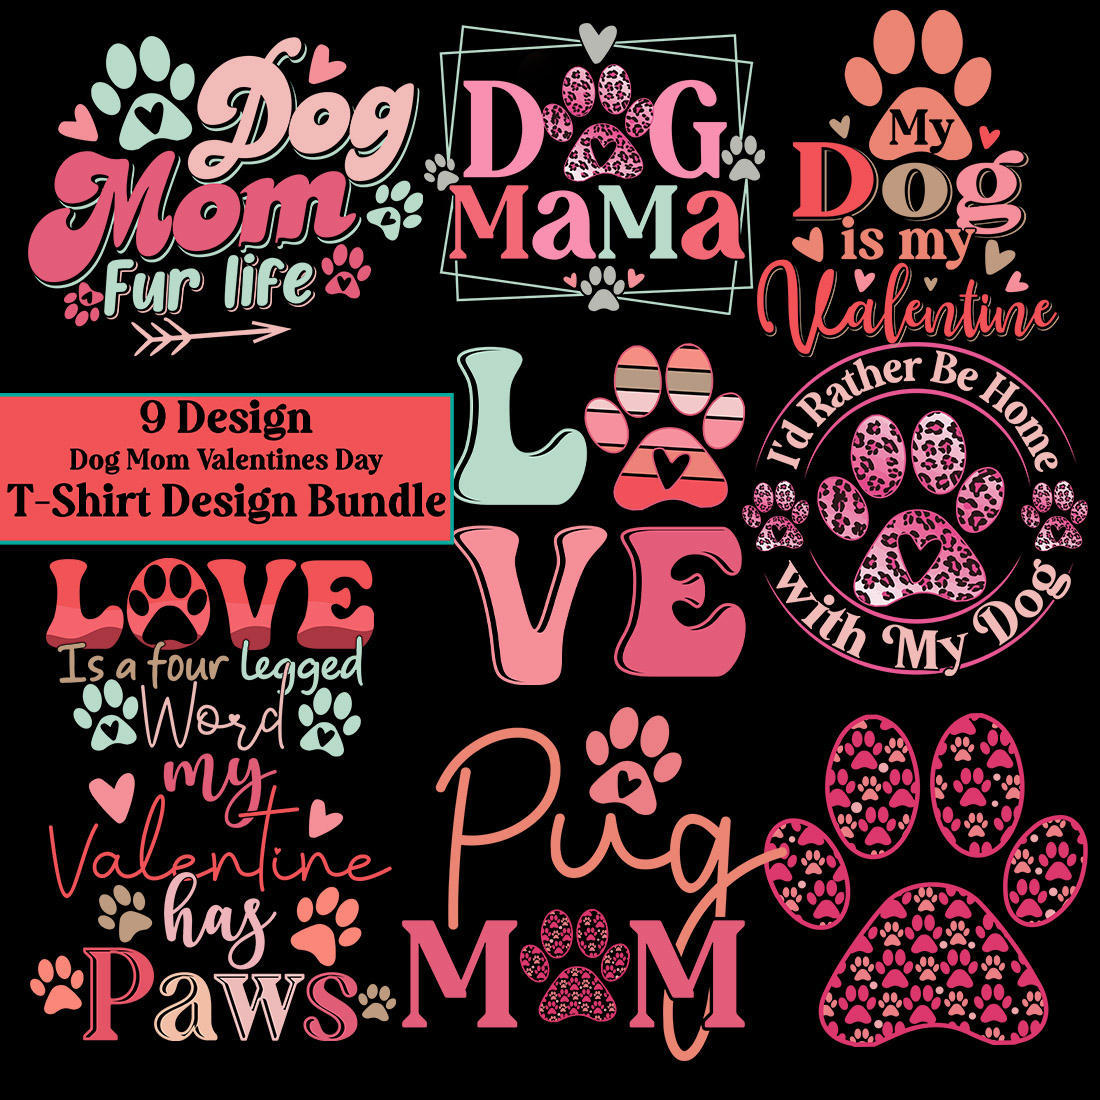 Retro Dog Mom Valentines Day T-Shirt Design Bundle main cover.